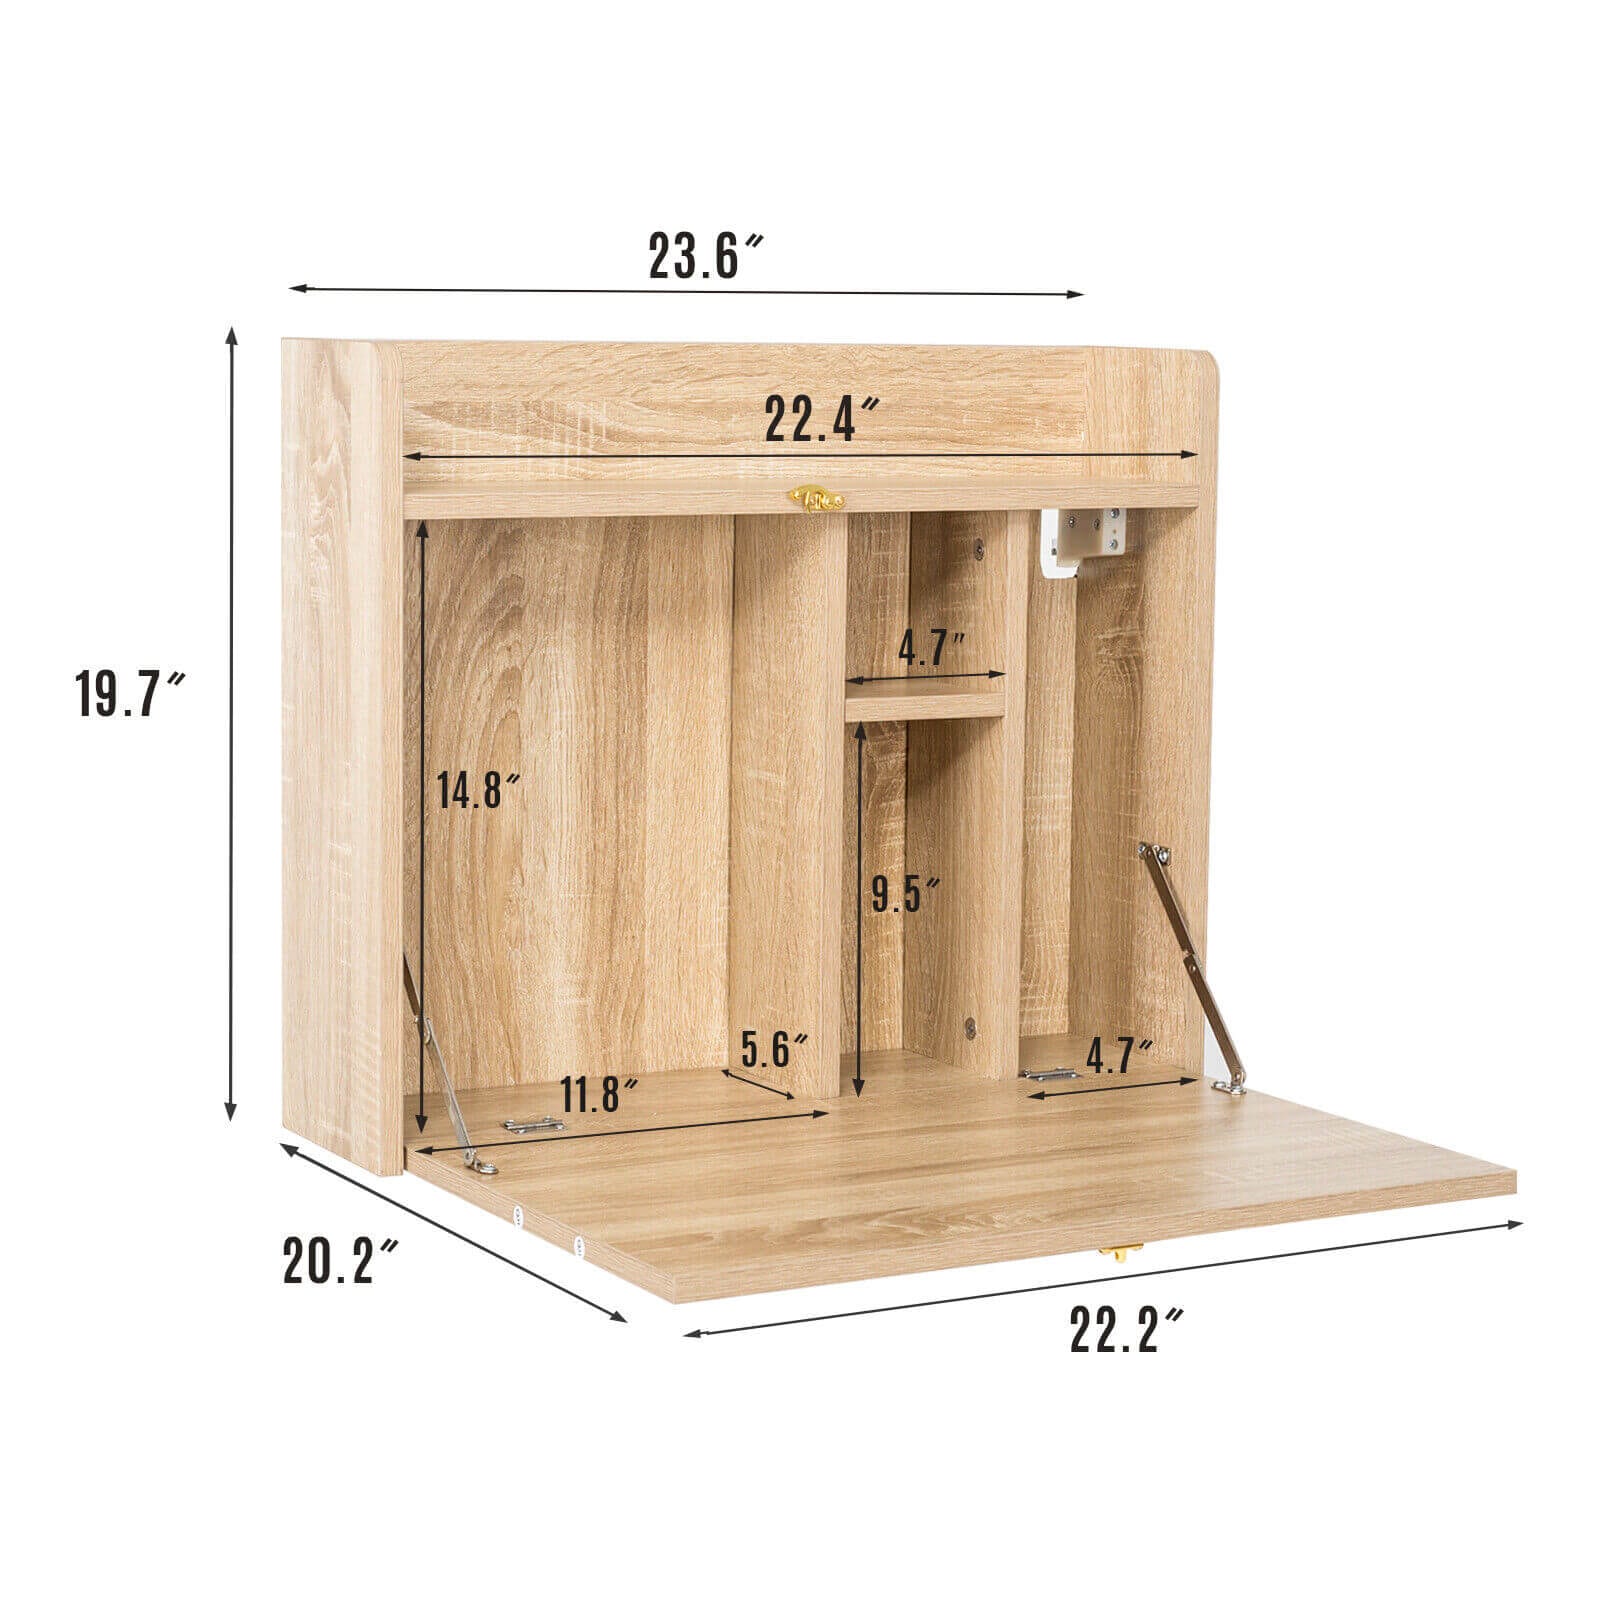 Elecwish Maple Wall Mounted Table Foldable Storage Shelf Wall-Mounted Desk HW1138 size 